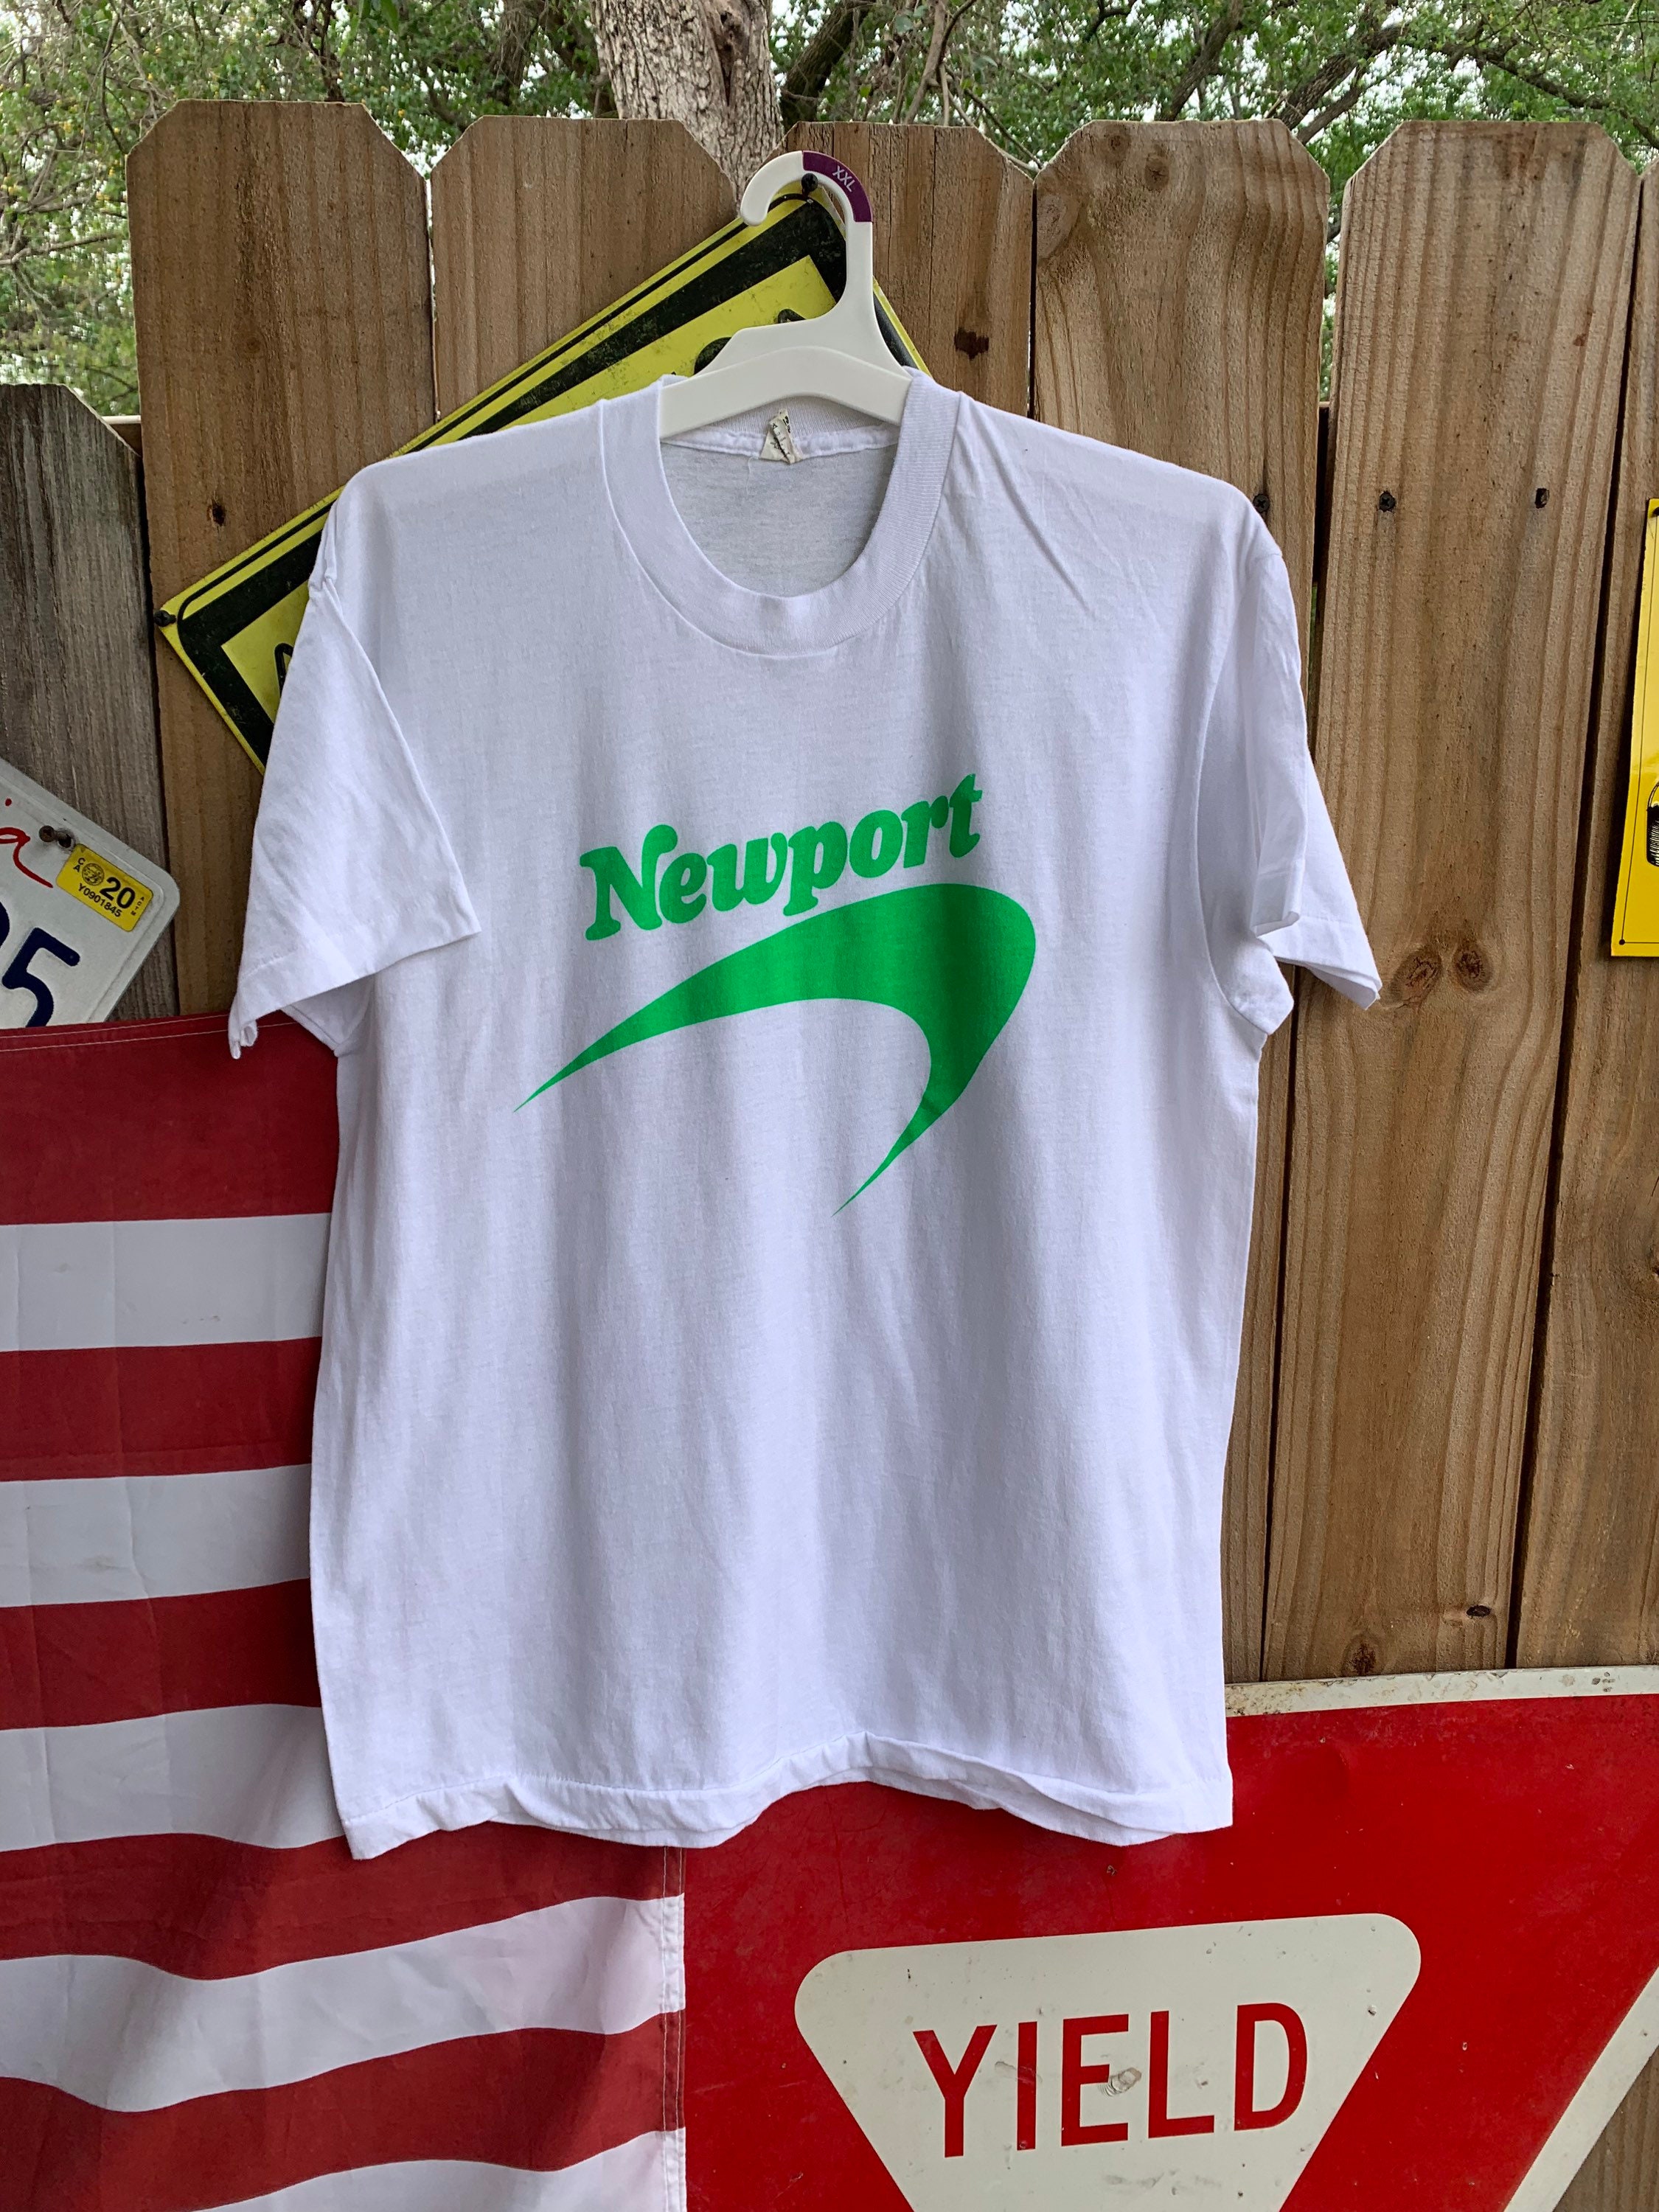 80s Newport Shirt - Etsy